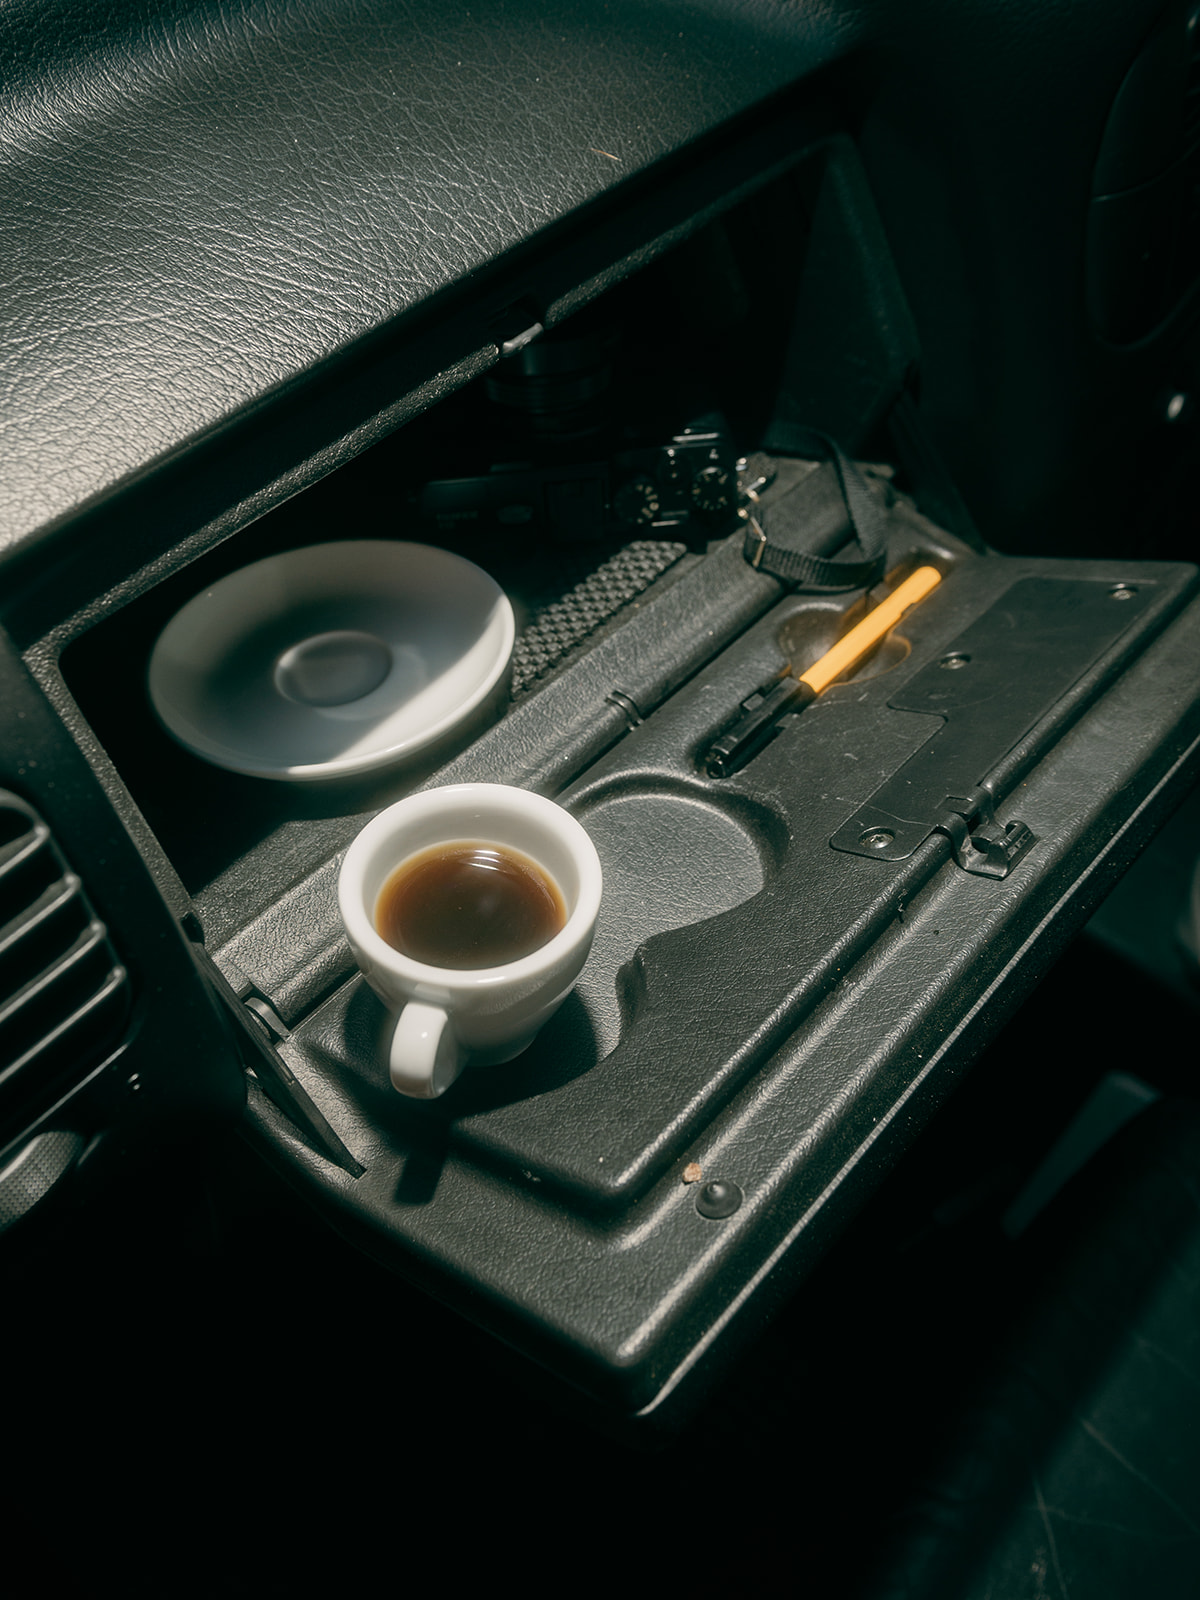 espresso cup holder in the Volkswagen mk3 gti